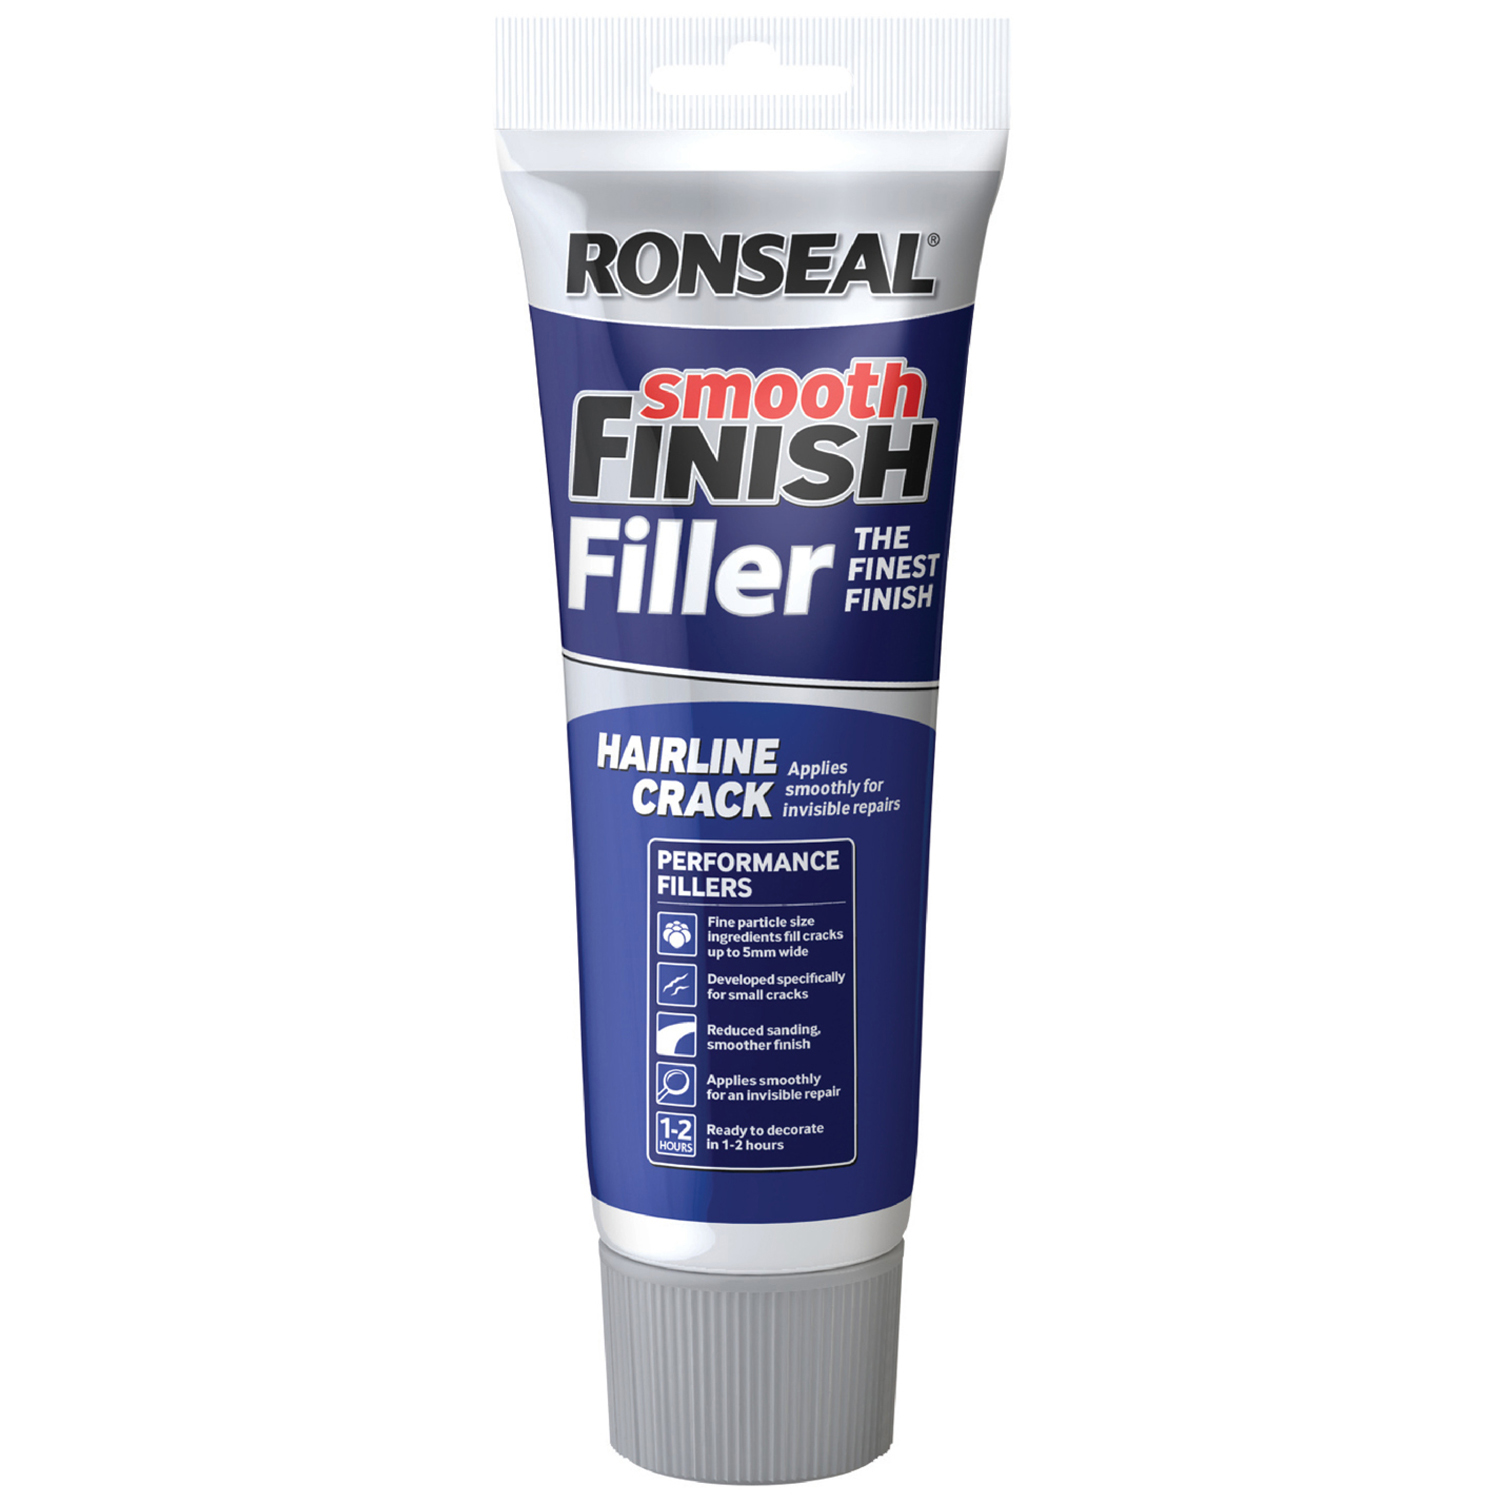 Ronseal Hairline Crack Smooth Finish Filler Image